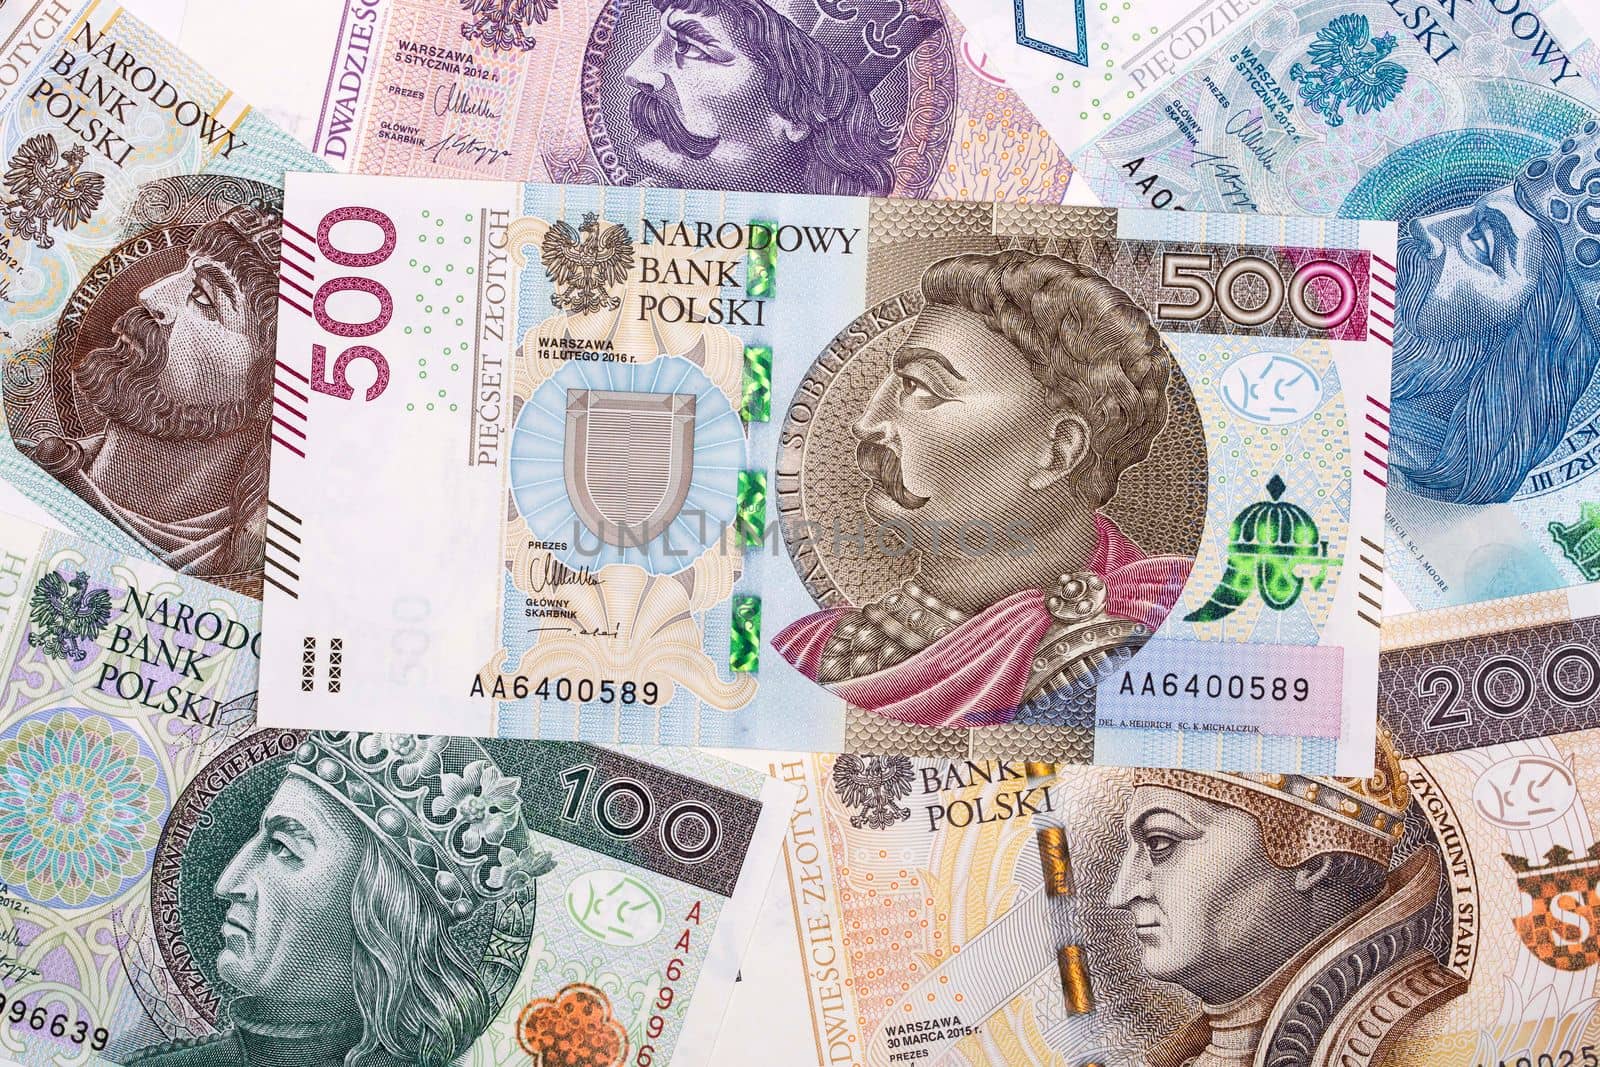 Polish money - Zloty a business background